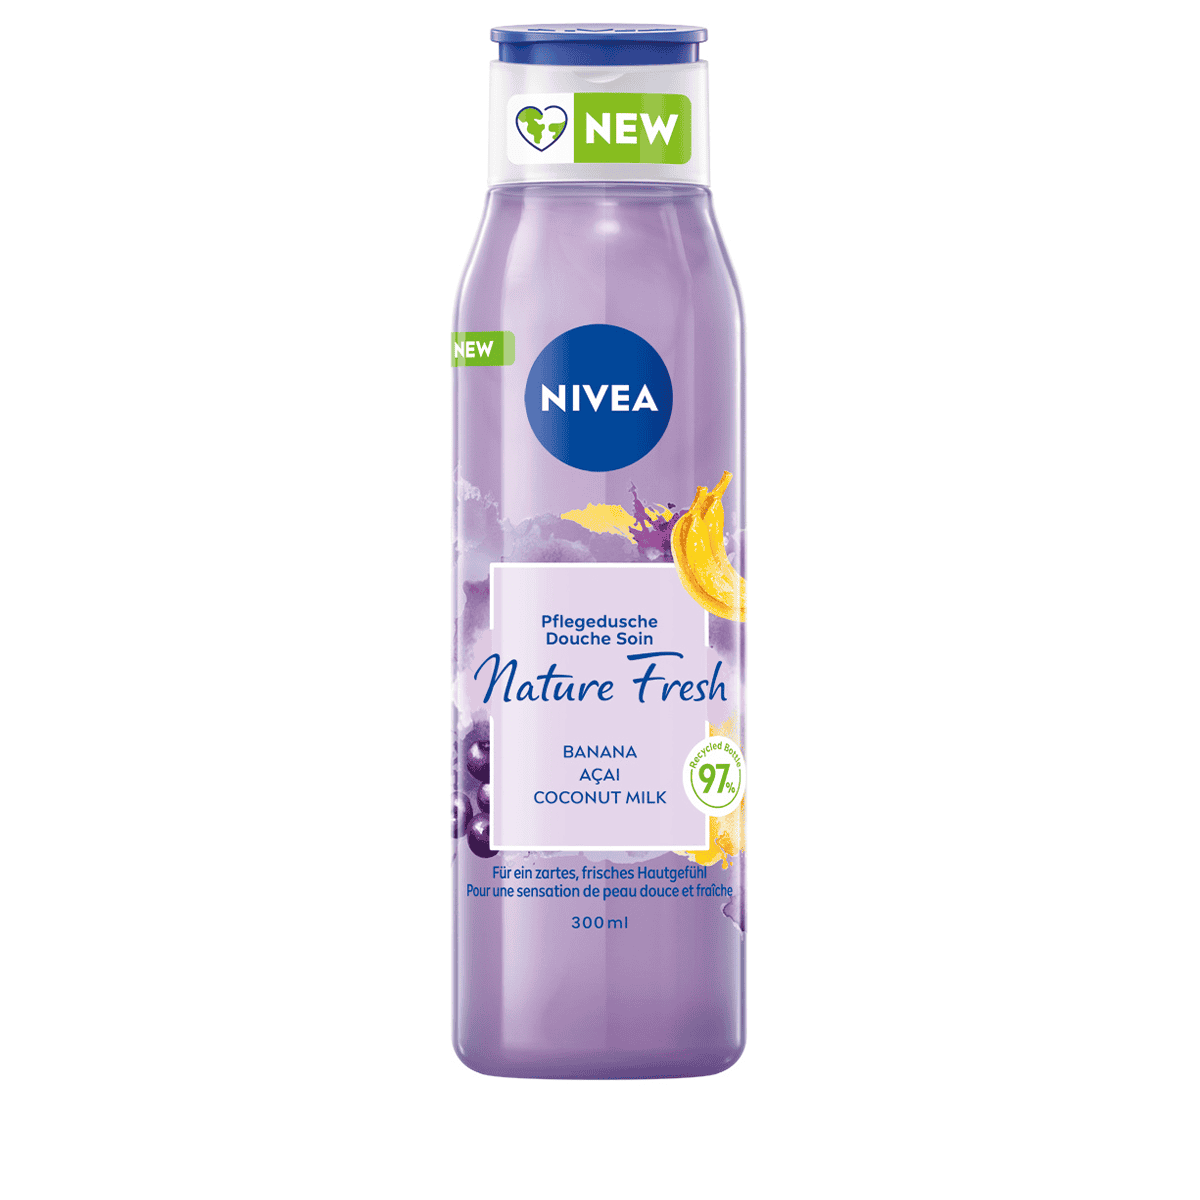 Huile de coco capillaire, un soin naturel – NIVEA - NIVEA Suisse